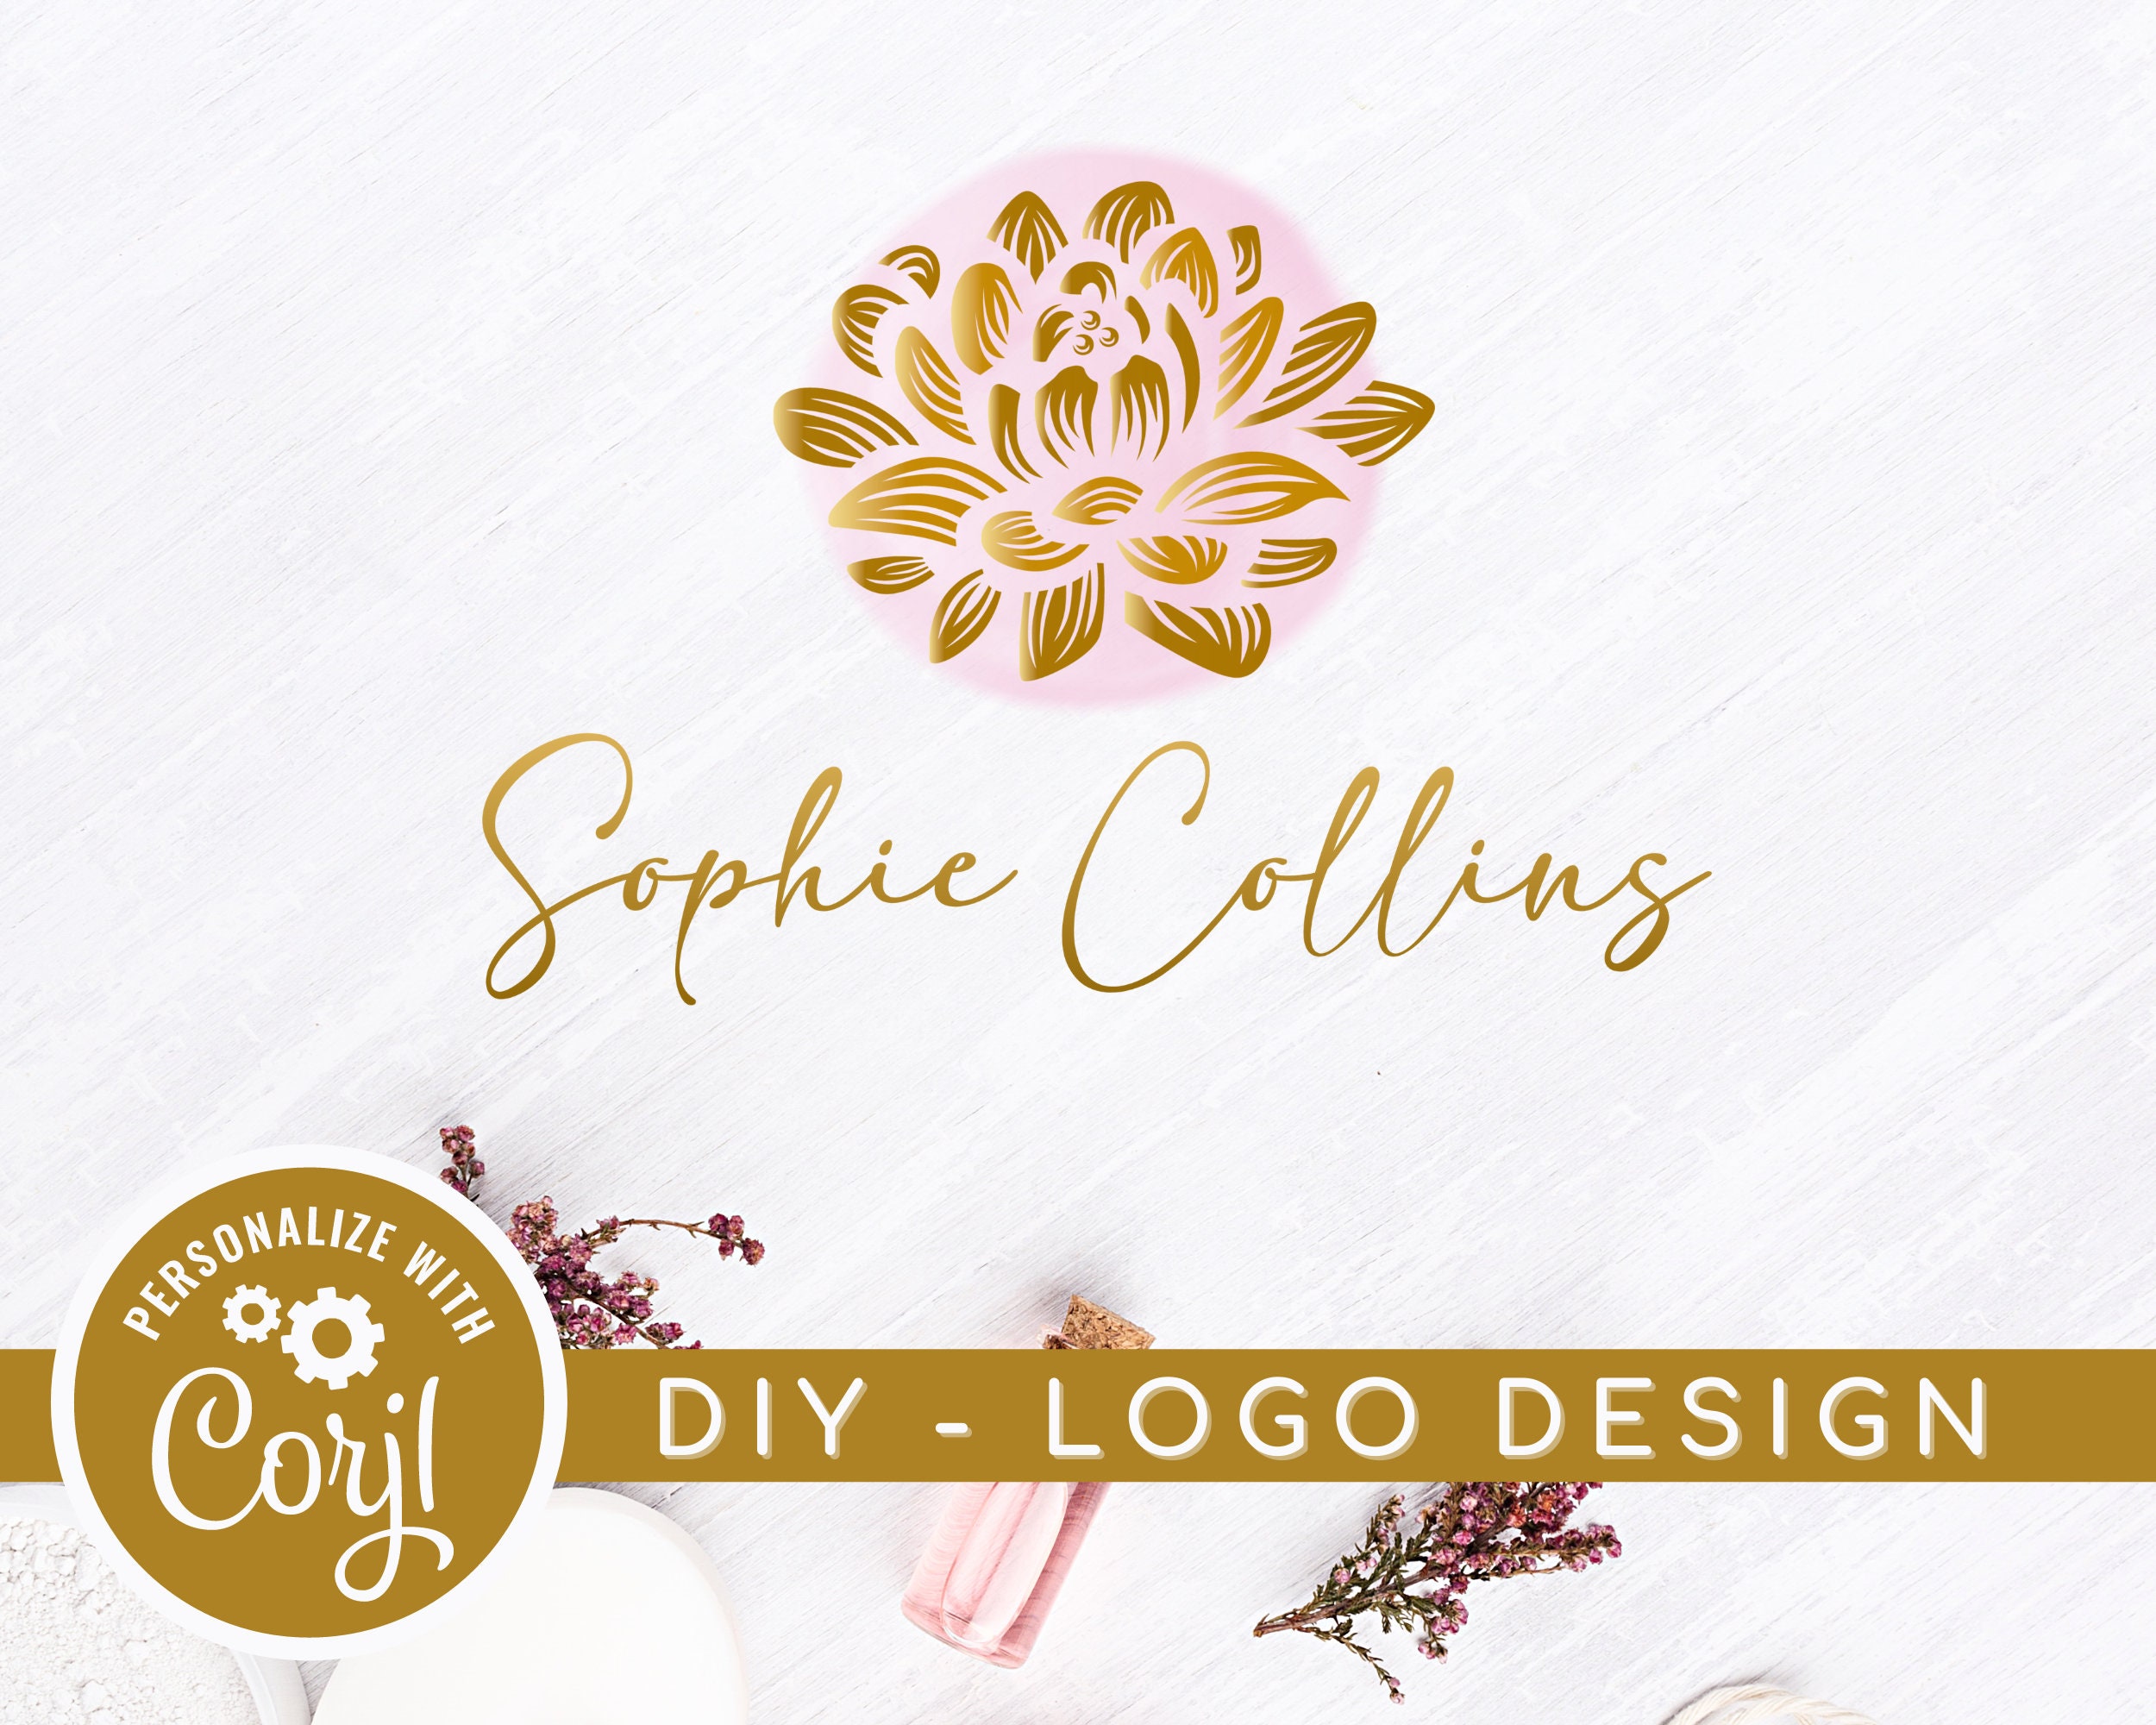 DIY Golden Lotus Logo Template -  Lotus Flower Design -  Editable Art Design -  Wellness Life Coaching Logo -  Premade Logo Design Instant Download